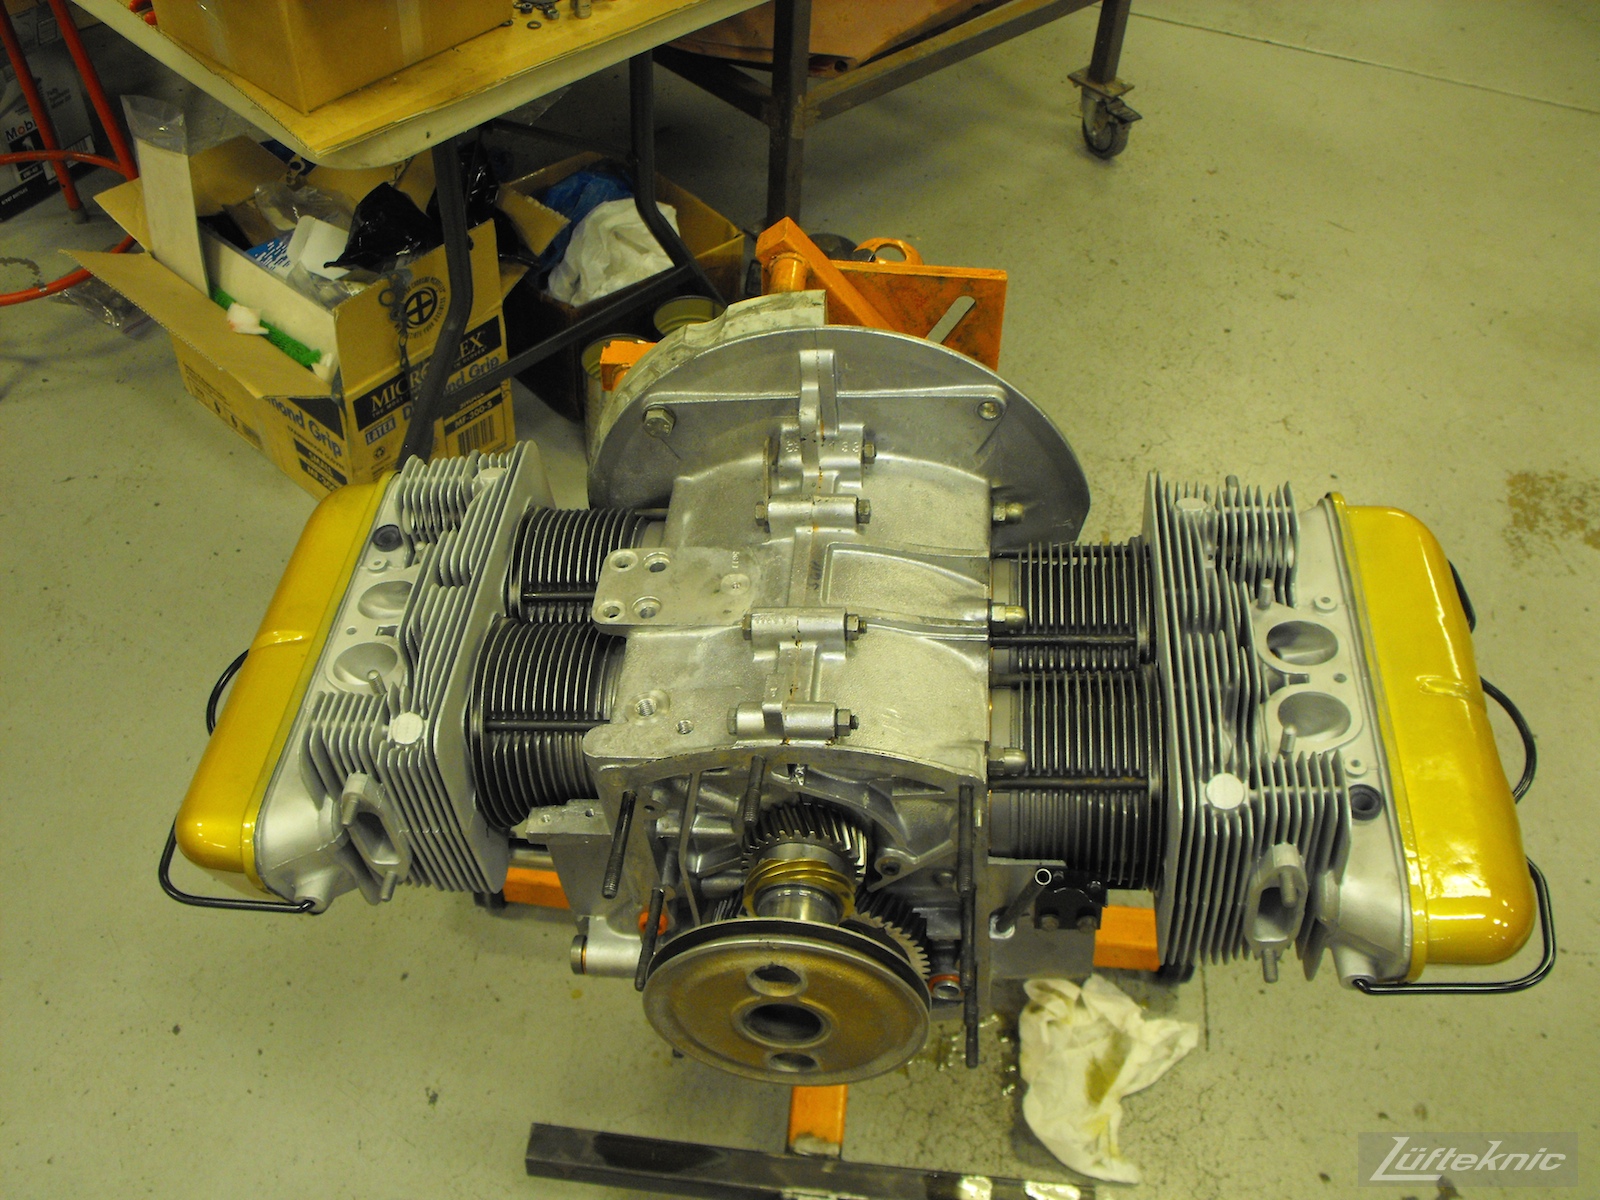 Engine reassembly for an Irish Green Porsche 912 undergoing restoration at Lufteknic.